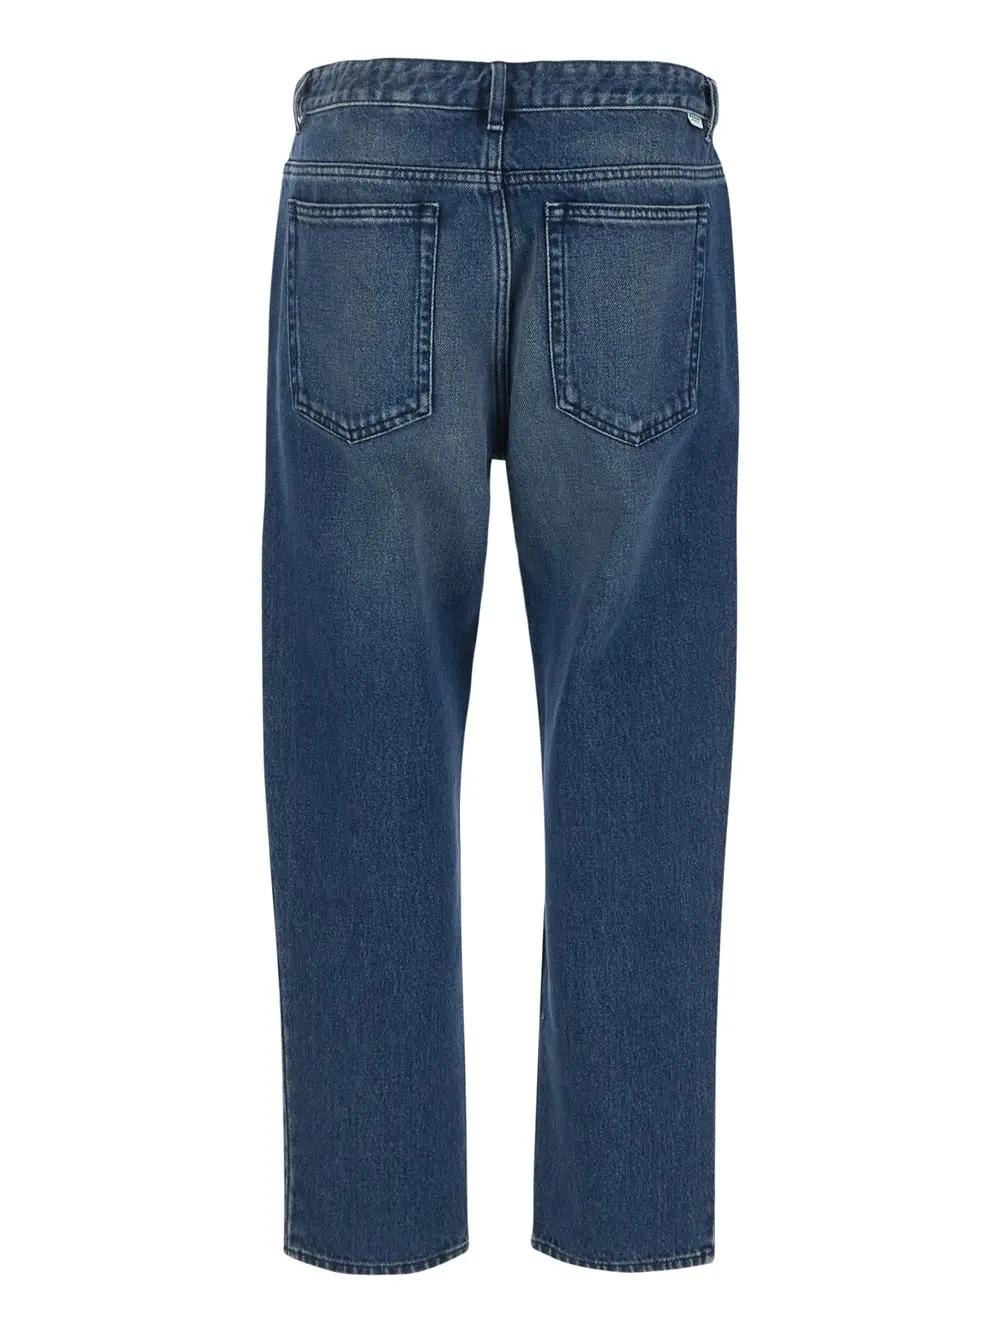 Shop Marant Etoile Nea Jeans In Blue